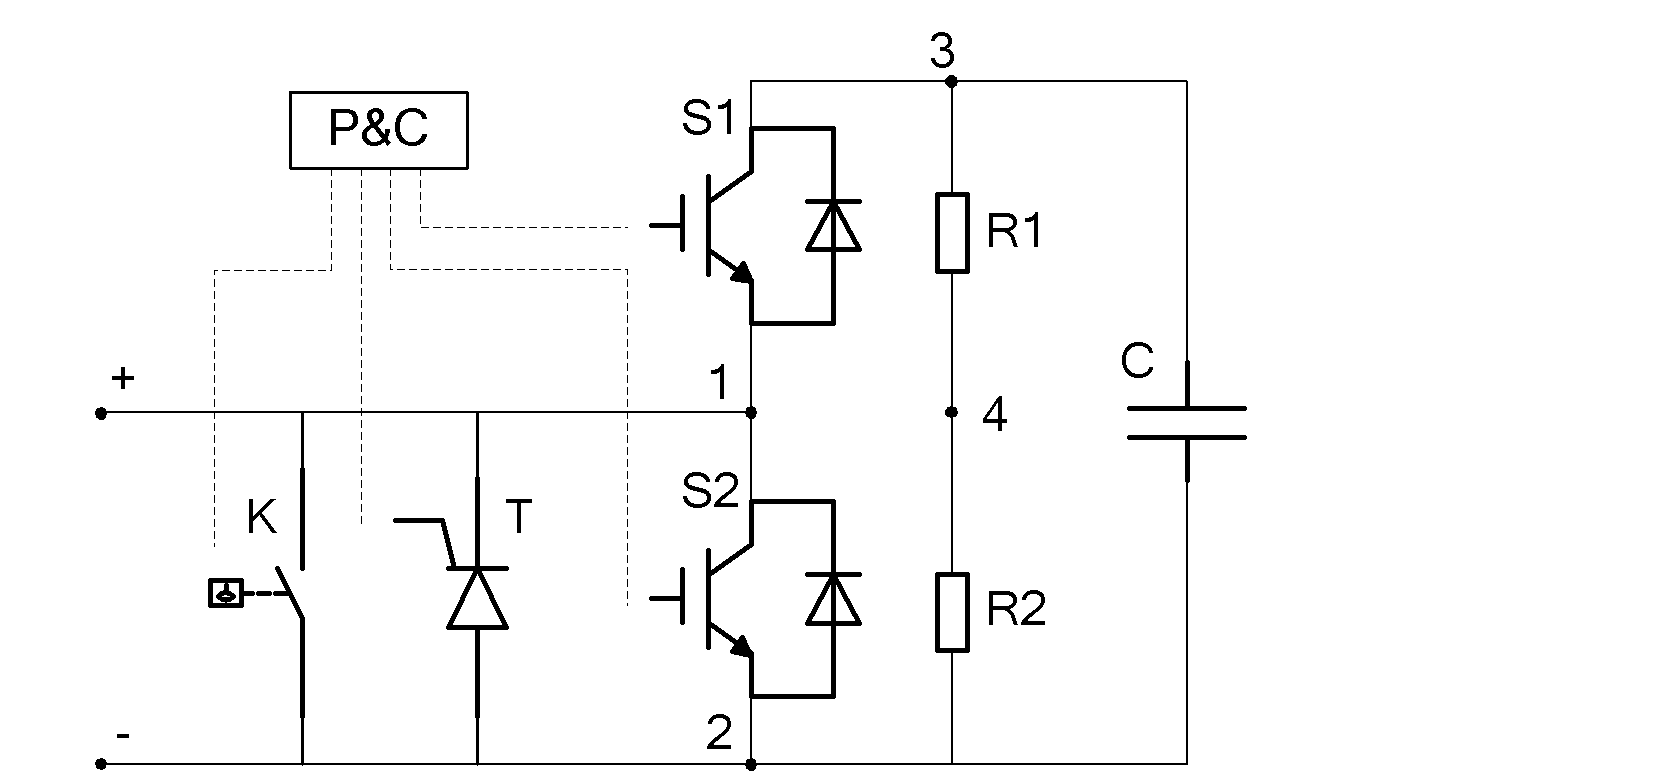 Method for realizing insulation coordination of basic functional units of voltage source converter (VSC) based on half bridge circuit